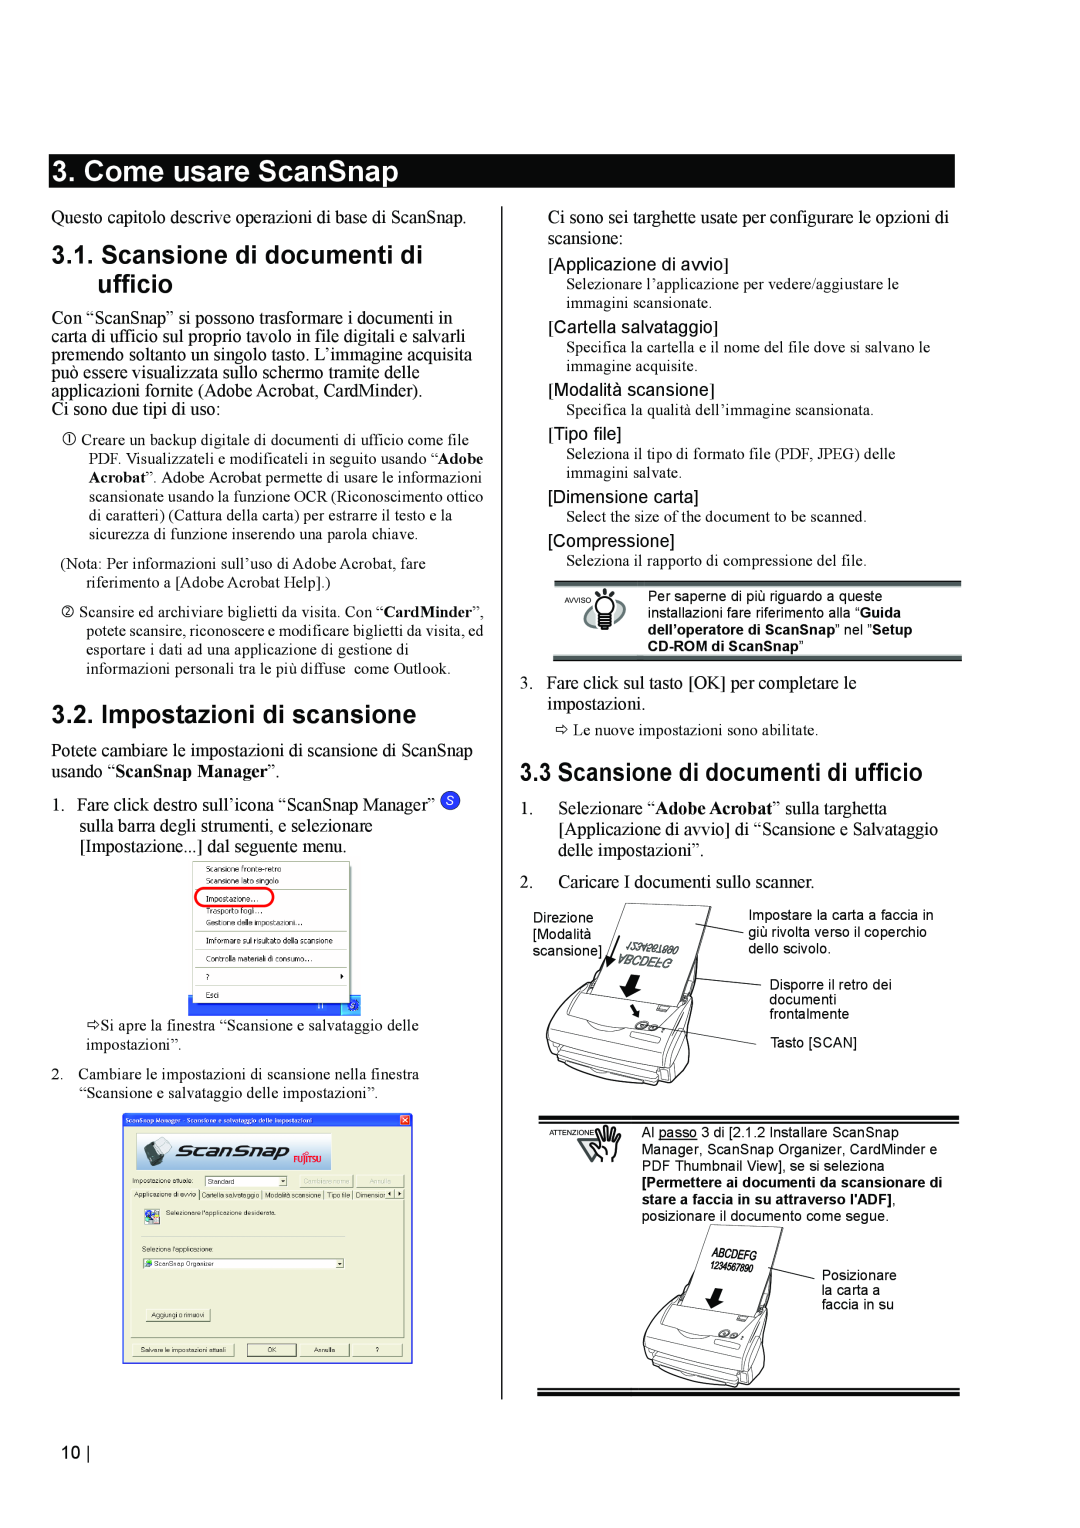 Fujitsu fi-5110EOX2 manual Come usare ScanSnap, Scansione di documenti di ufficio, Impostazioni di scansione 